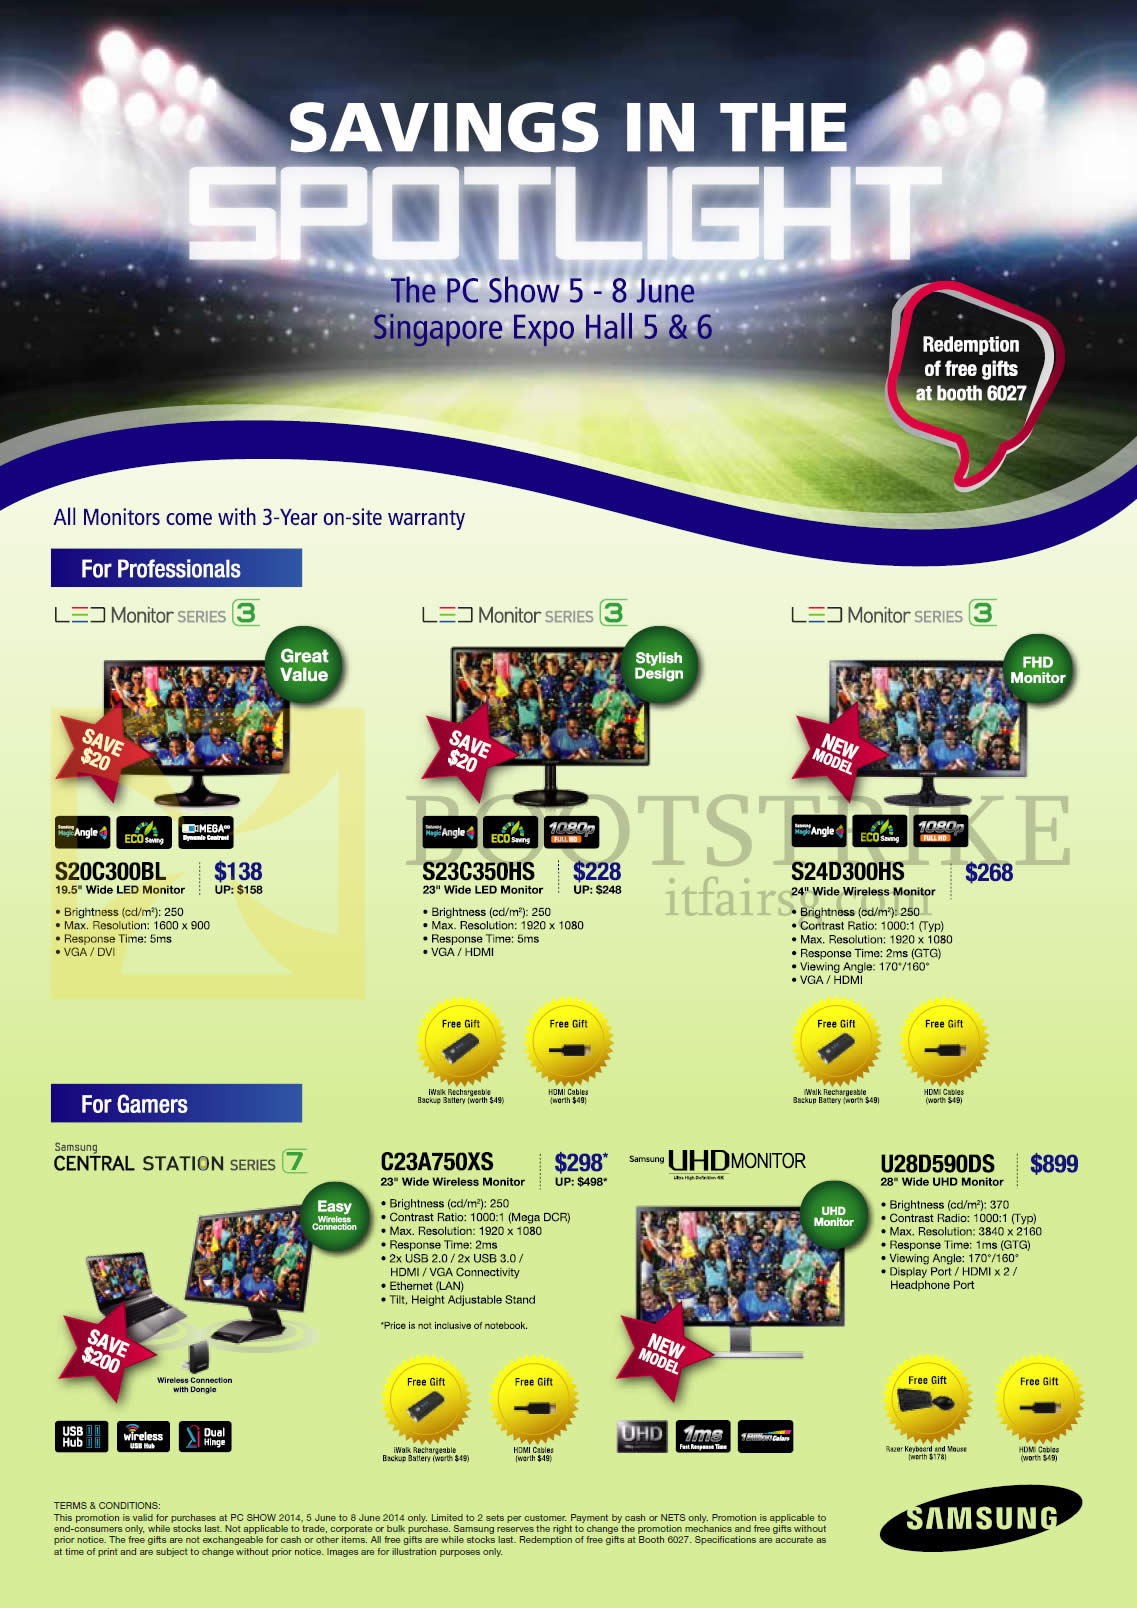 PC SHOW 2014 price list image brochure of Samsung Monitors LED S20C300BL, S23C350HS, S24D300HS, C23A750XS, U28D590DS